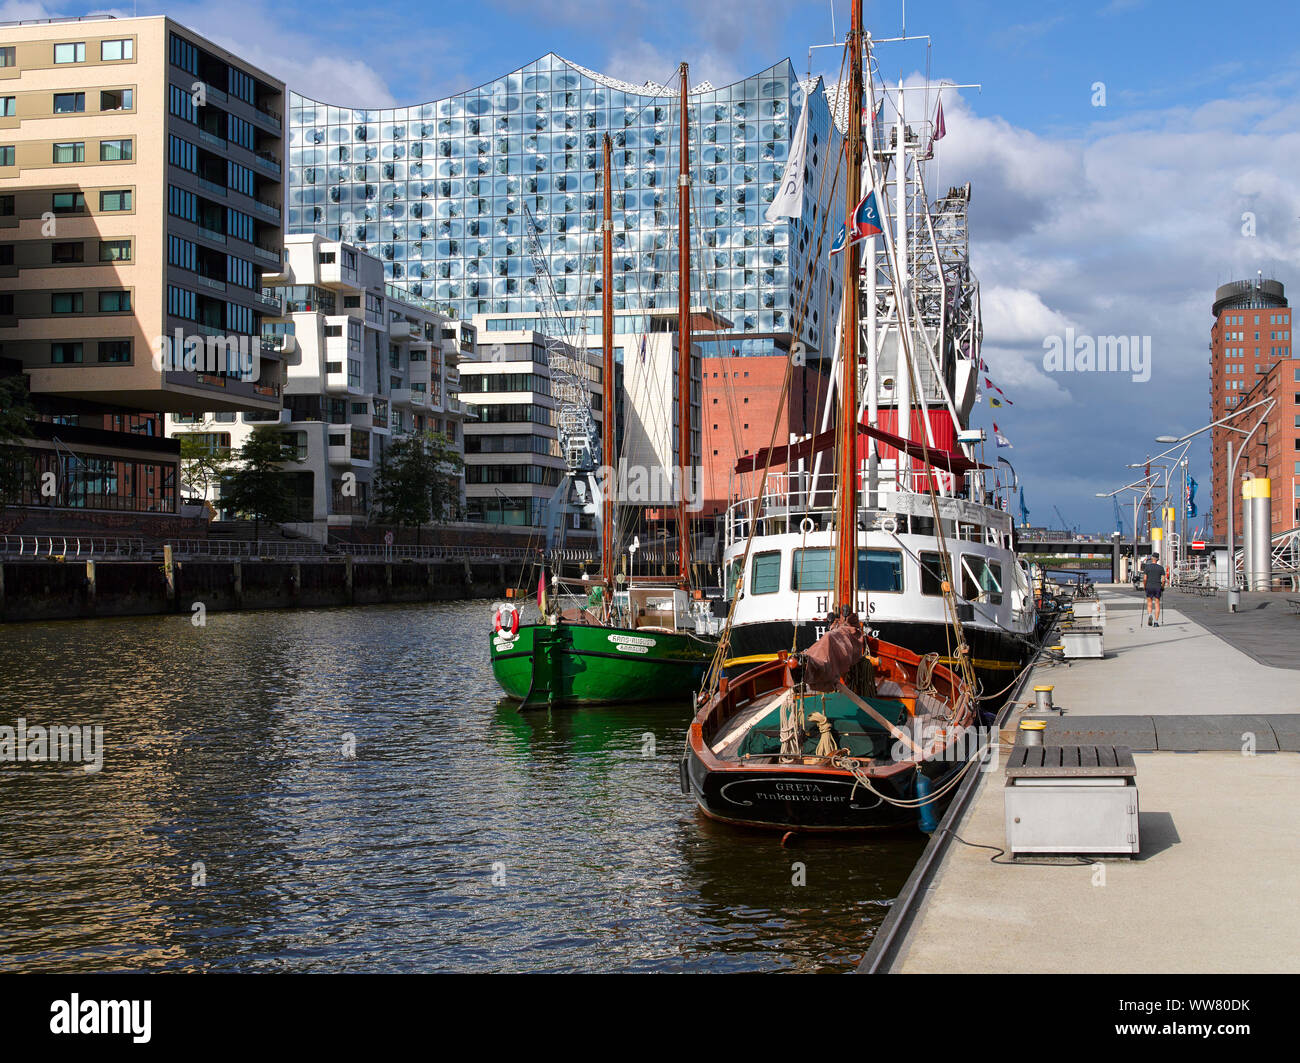 Sandtorhafen / traditional ship harbour in Hamburg, Germany, Europe Stock Photo